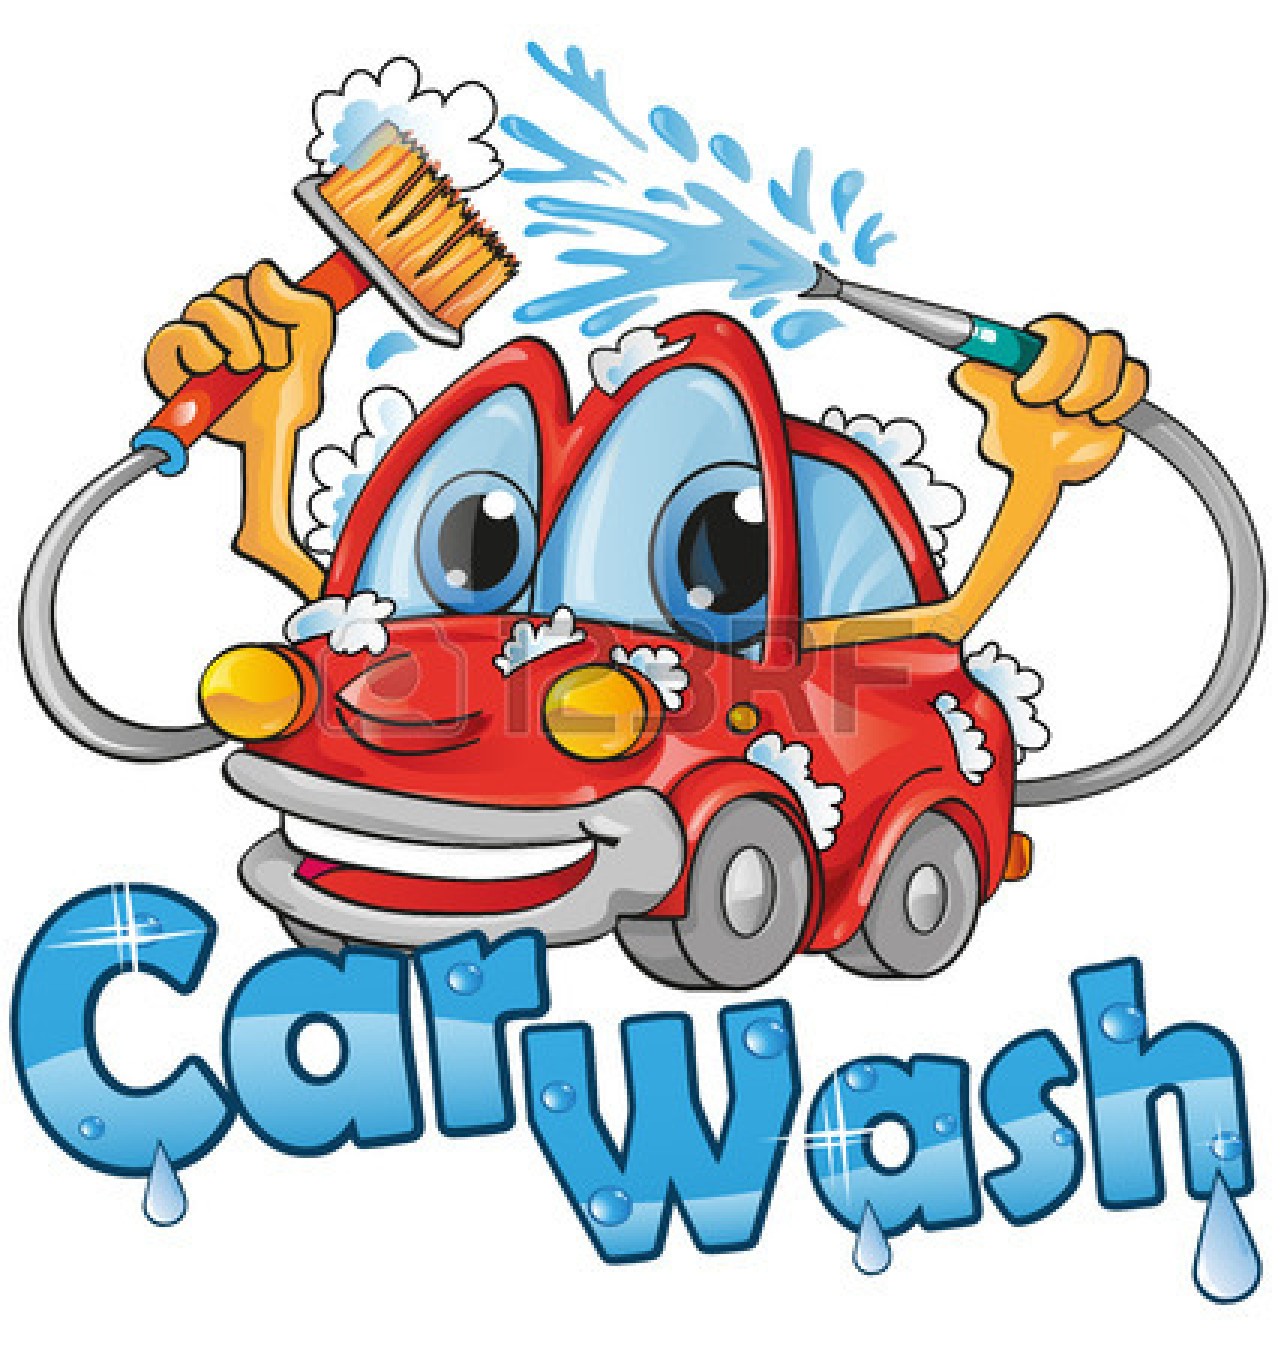 ... Car wash images clipart f